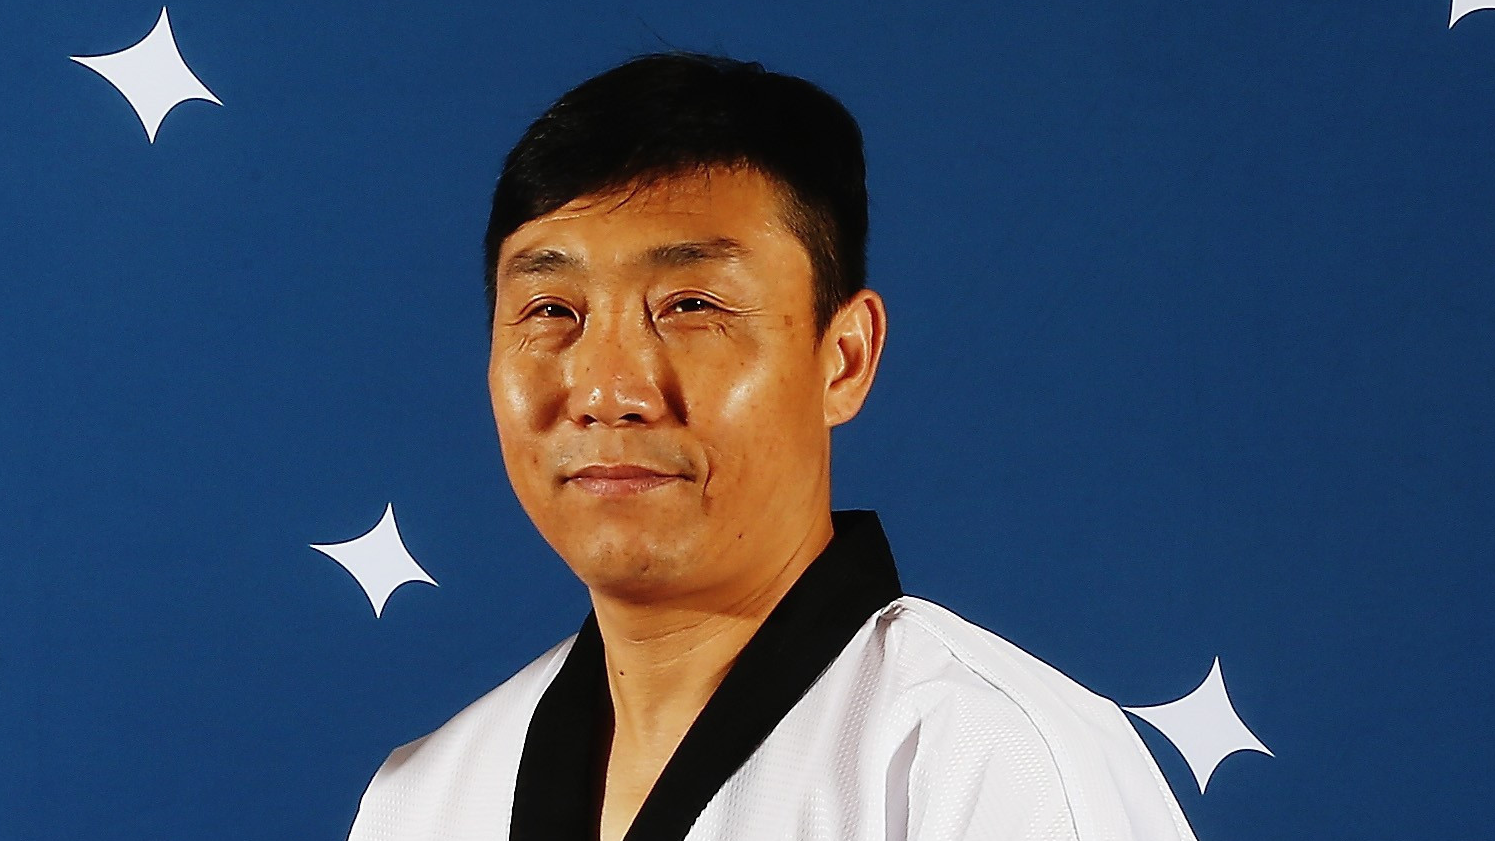 Taekwondo New Zealand President claims organisation will strive for "good relationships" in 2022